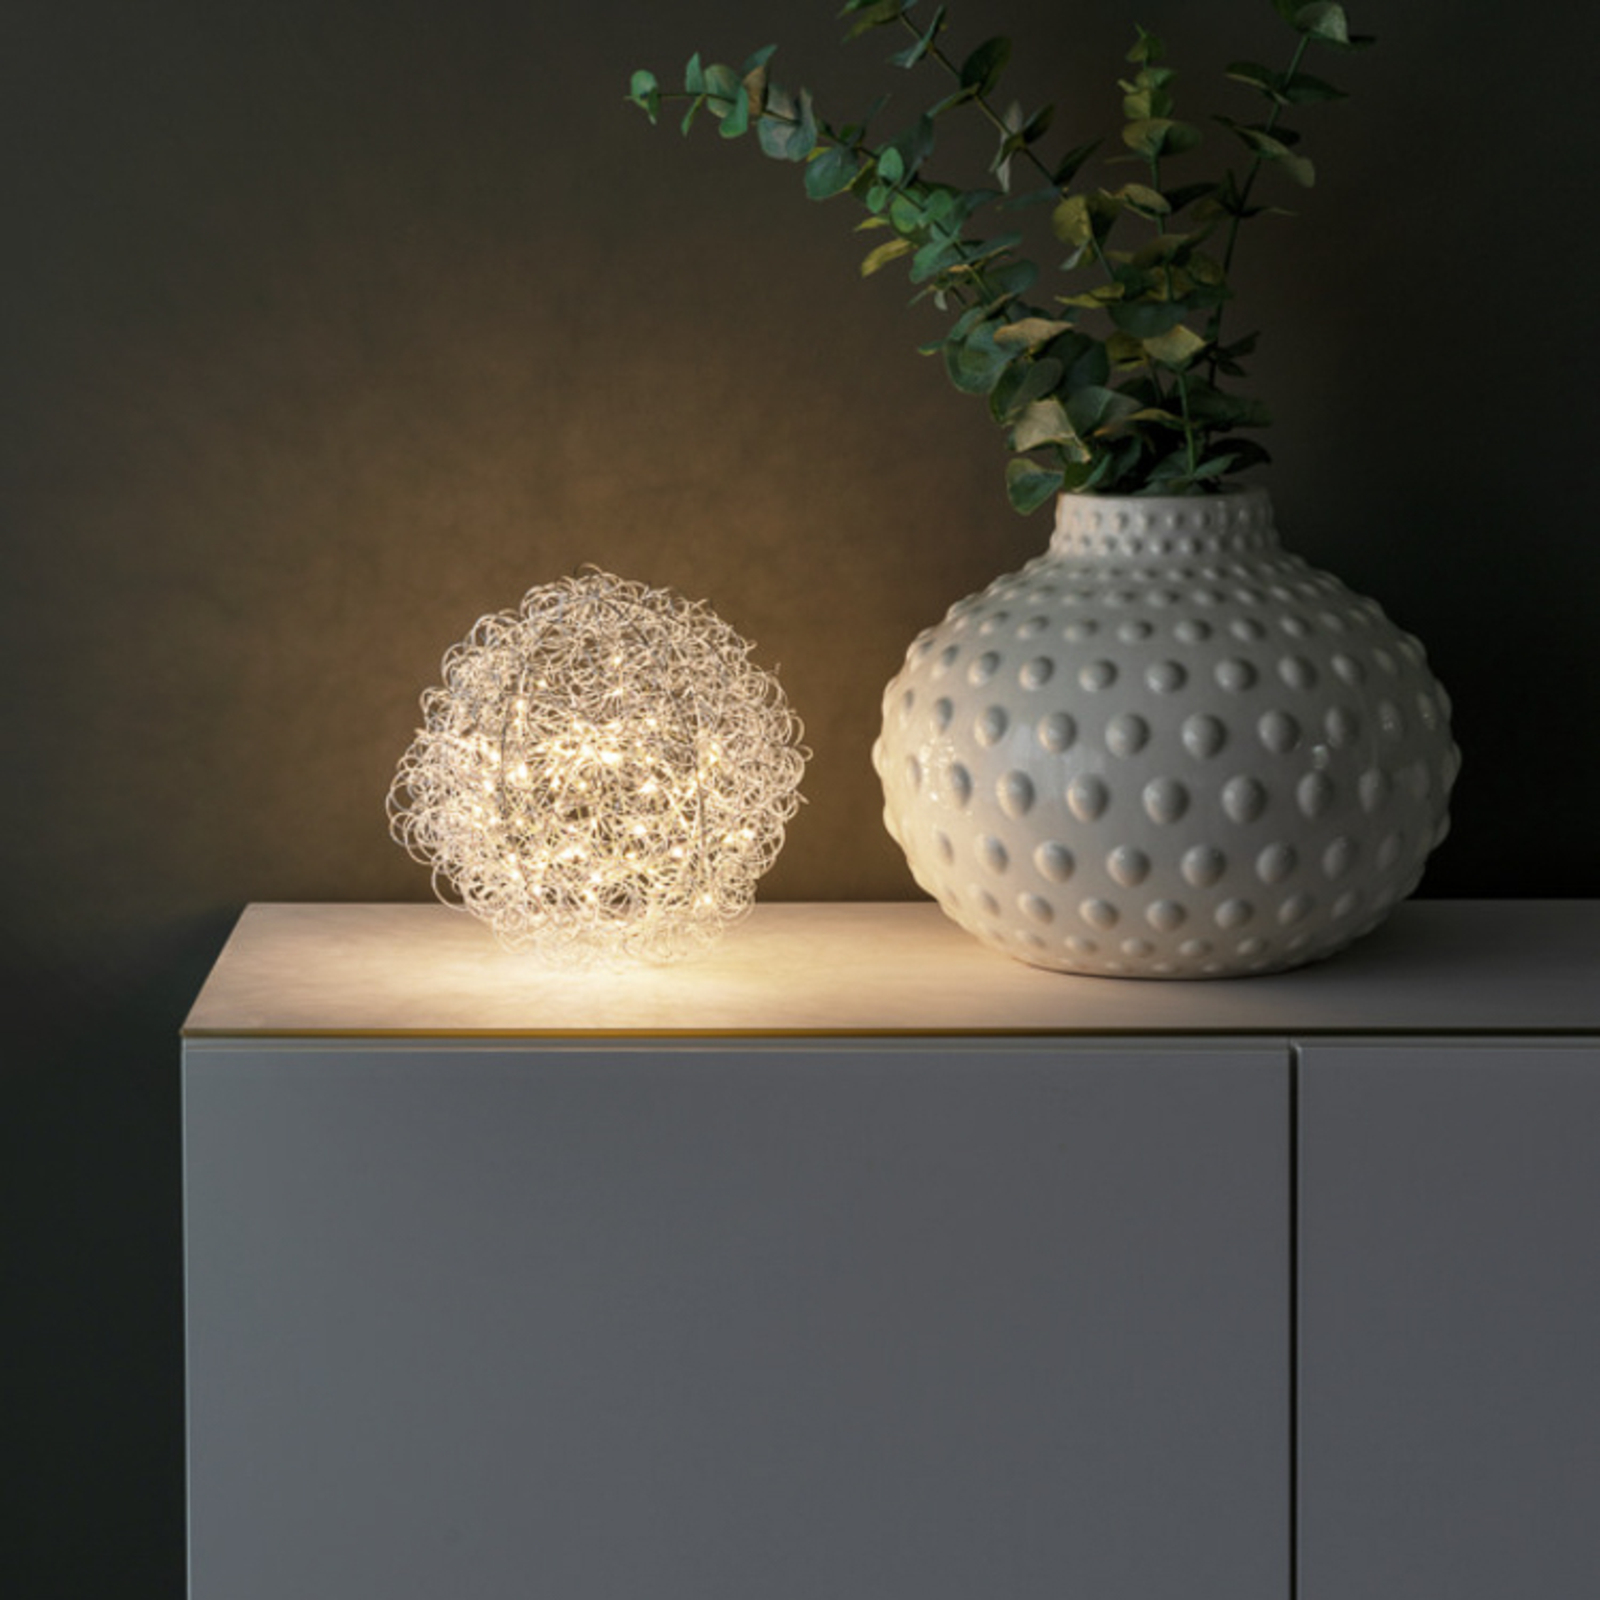 Lampe décorative LED Drahtball, Ø 25cm, 80 LEDs